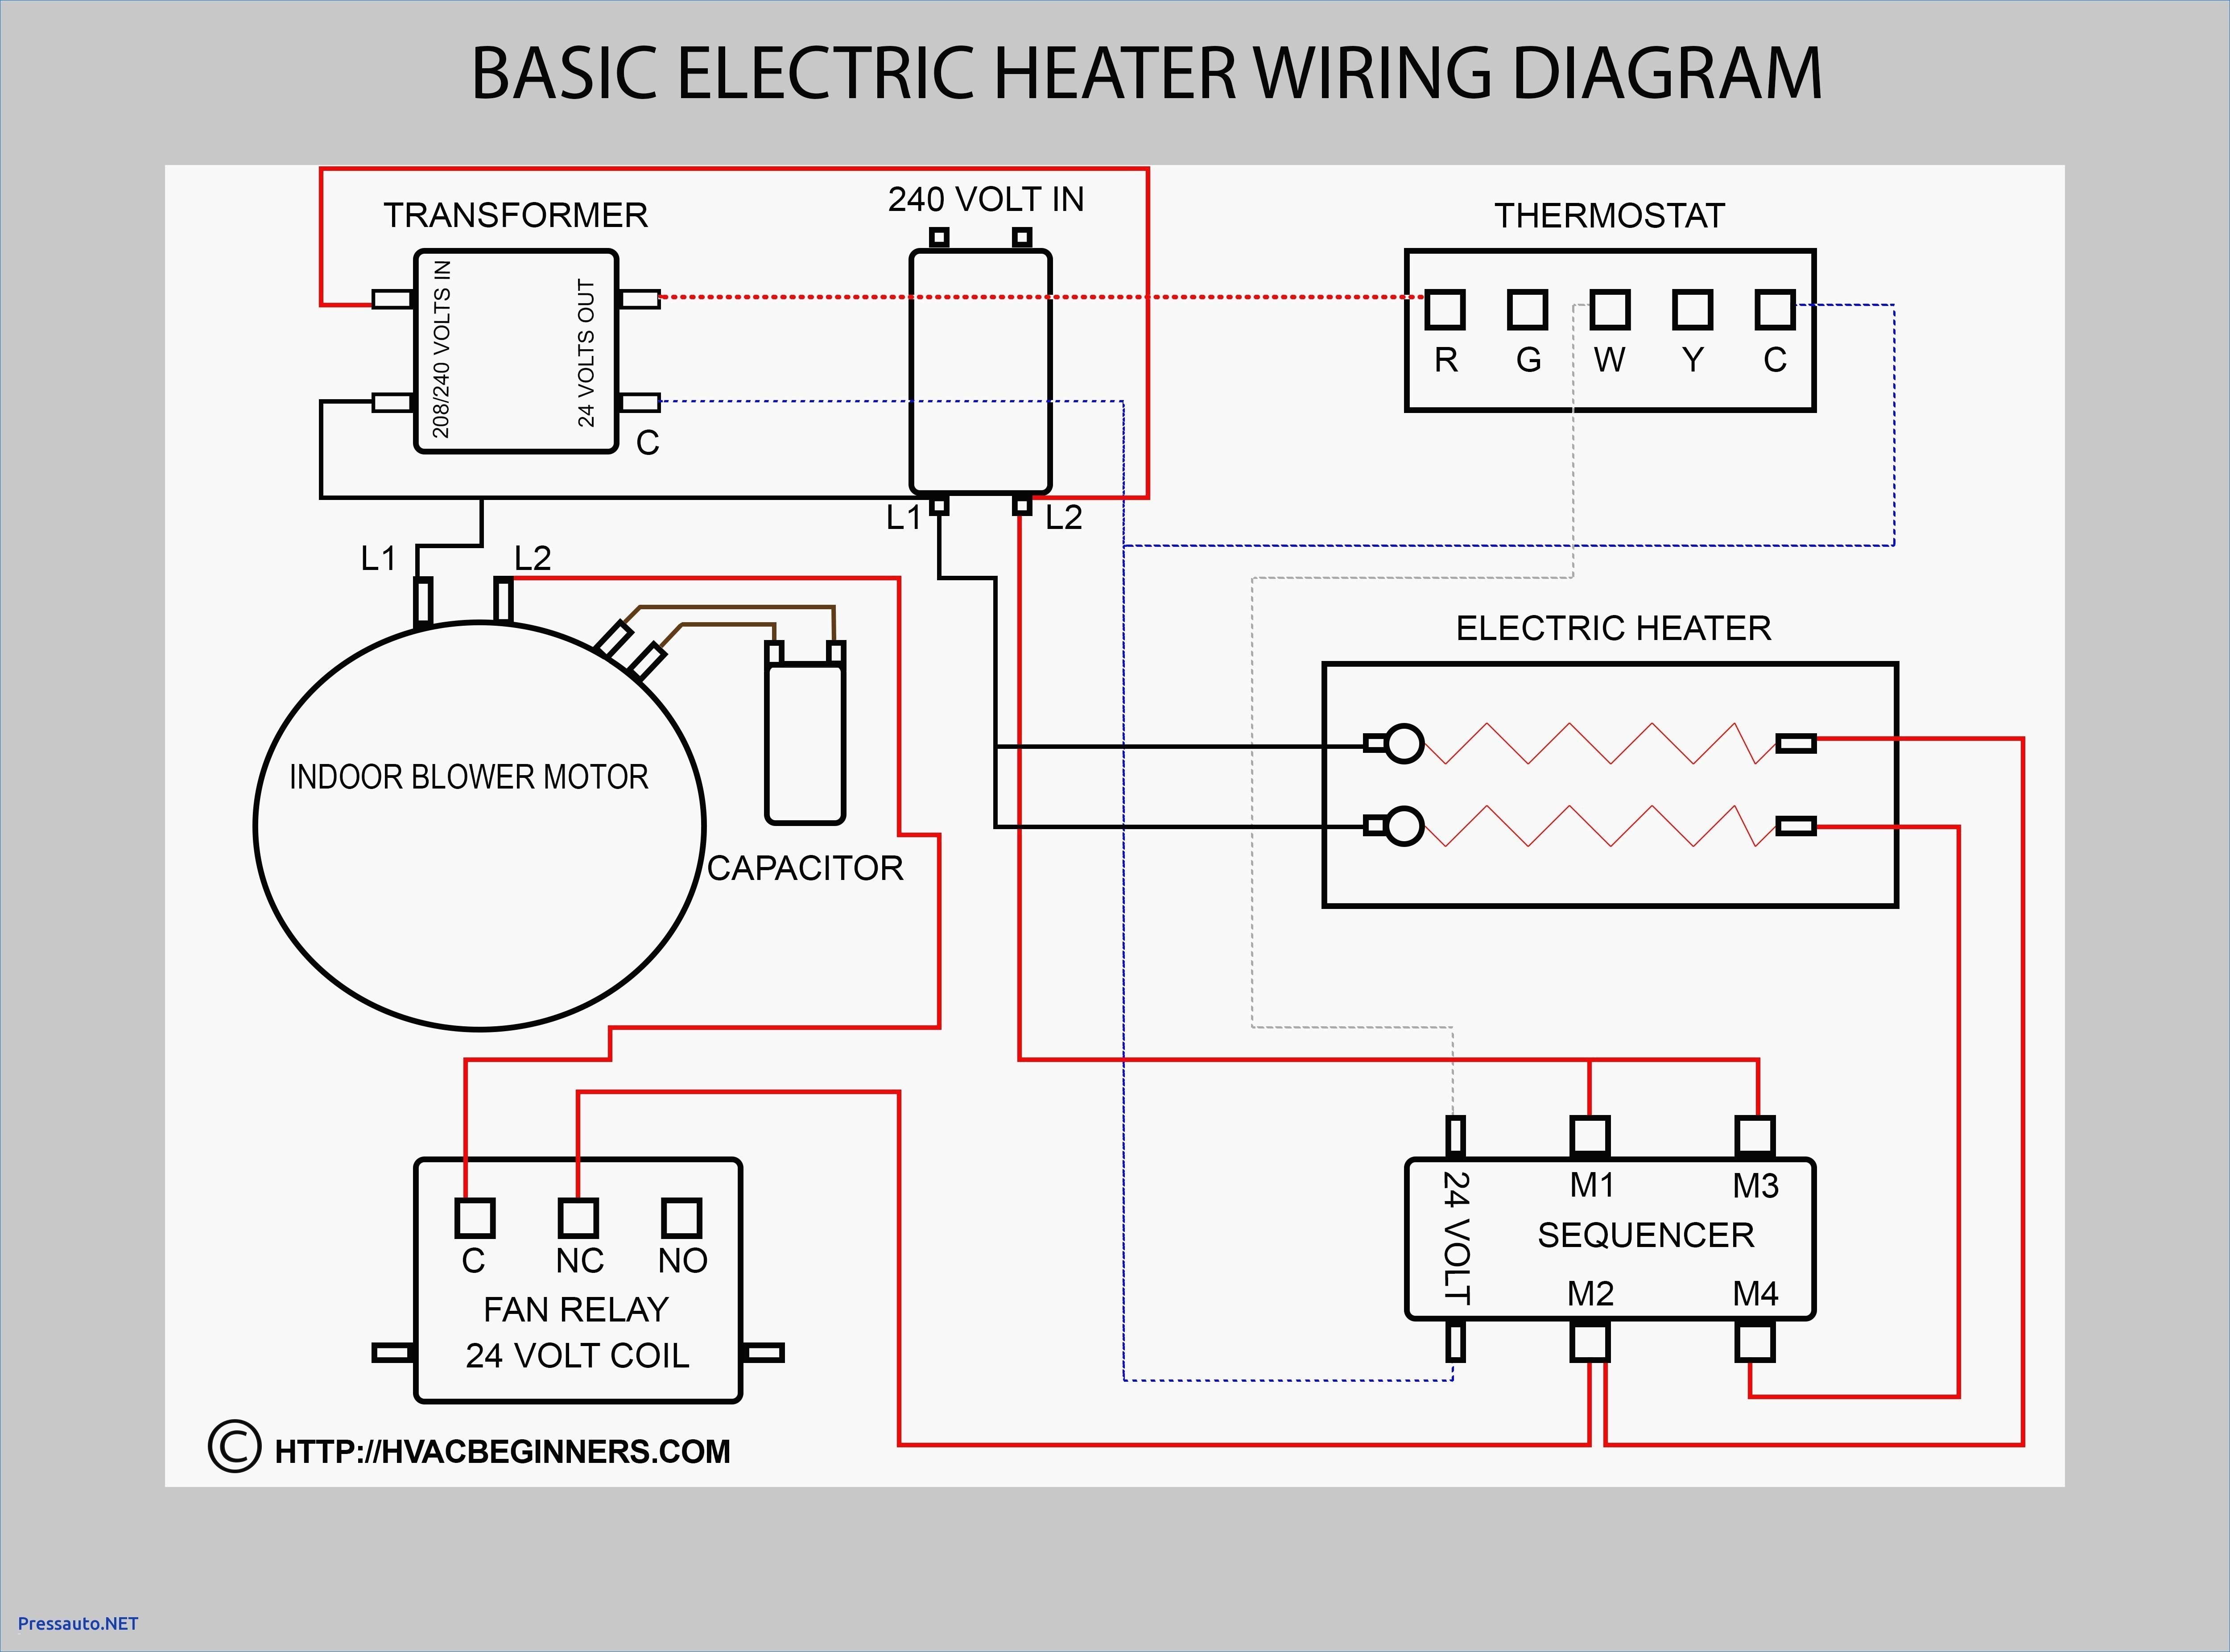 Goodman Heat Pump Wiring Diagram Goodman Air Handler Wiring Diagram New Electric Heat Wiring Diagram